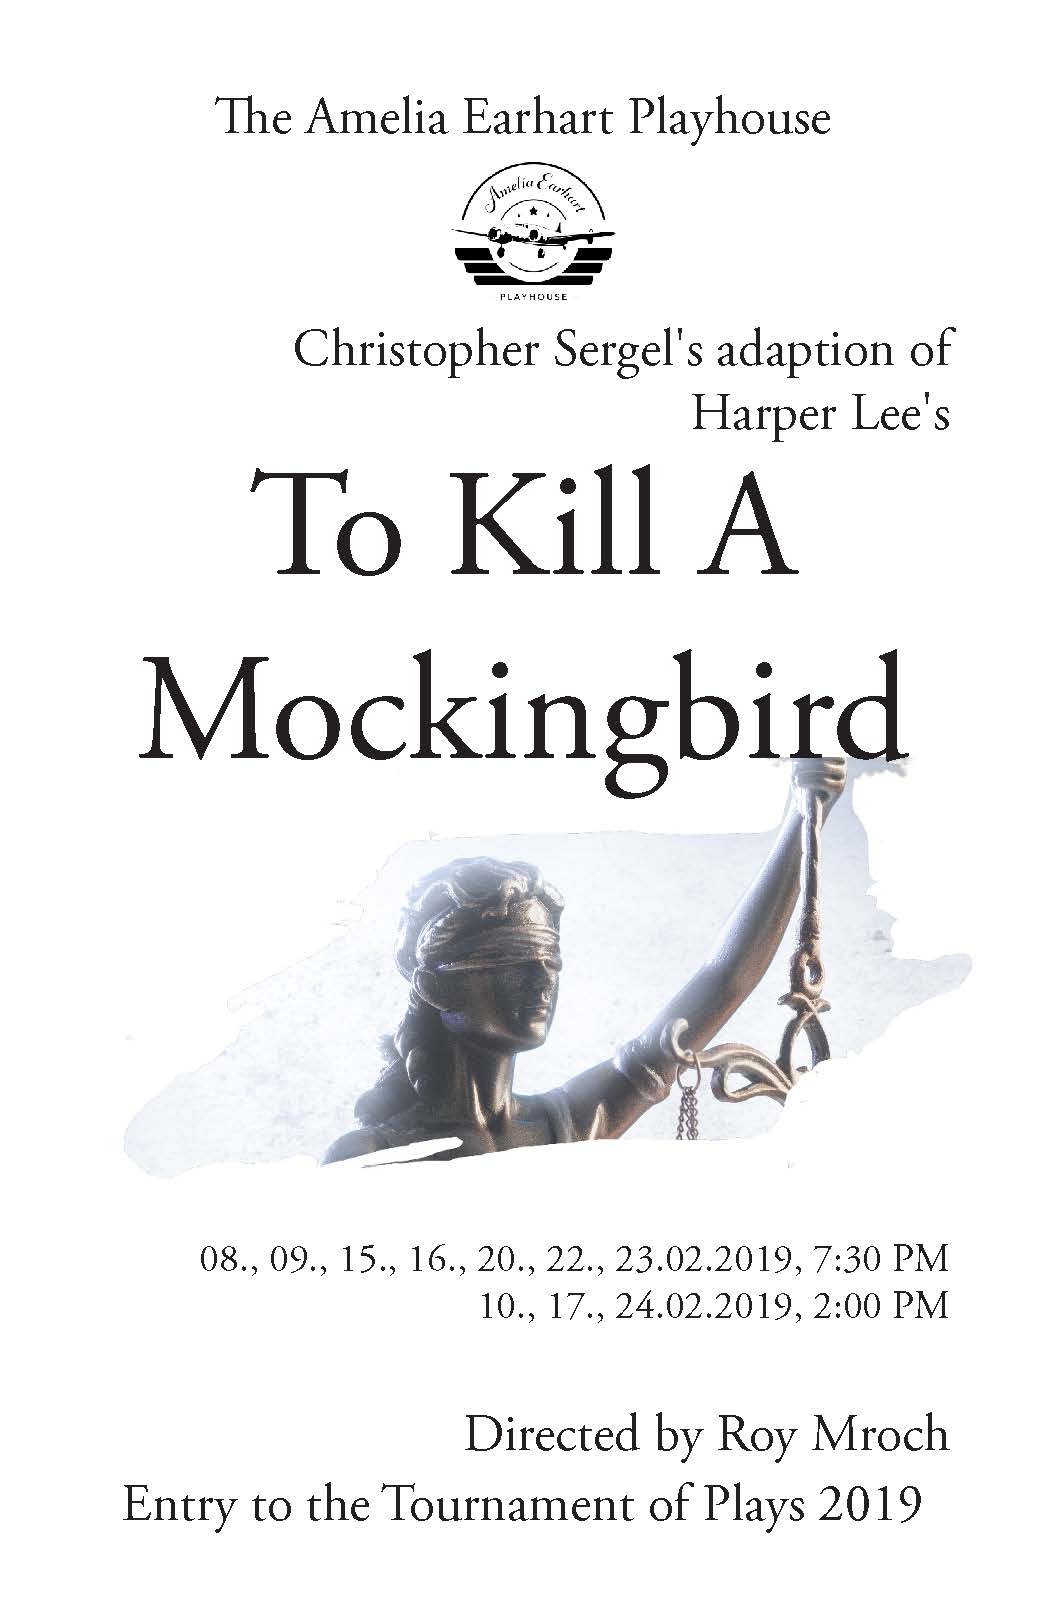 playbill to kill a mockingbird 20190206 final reordered_Page_01.jpg